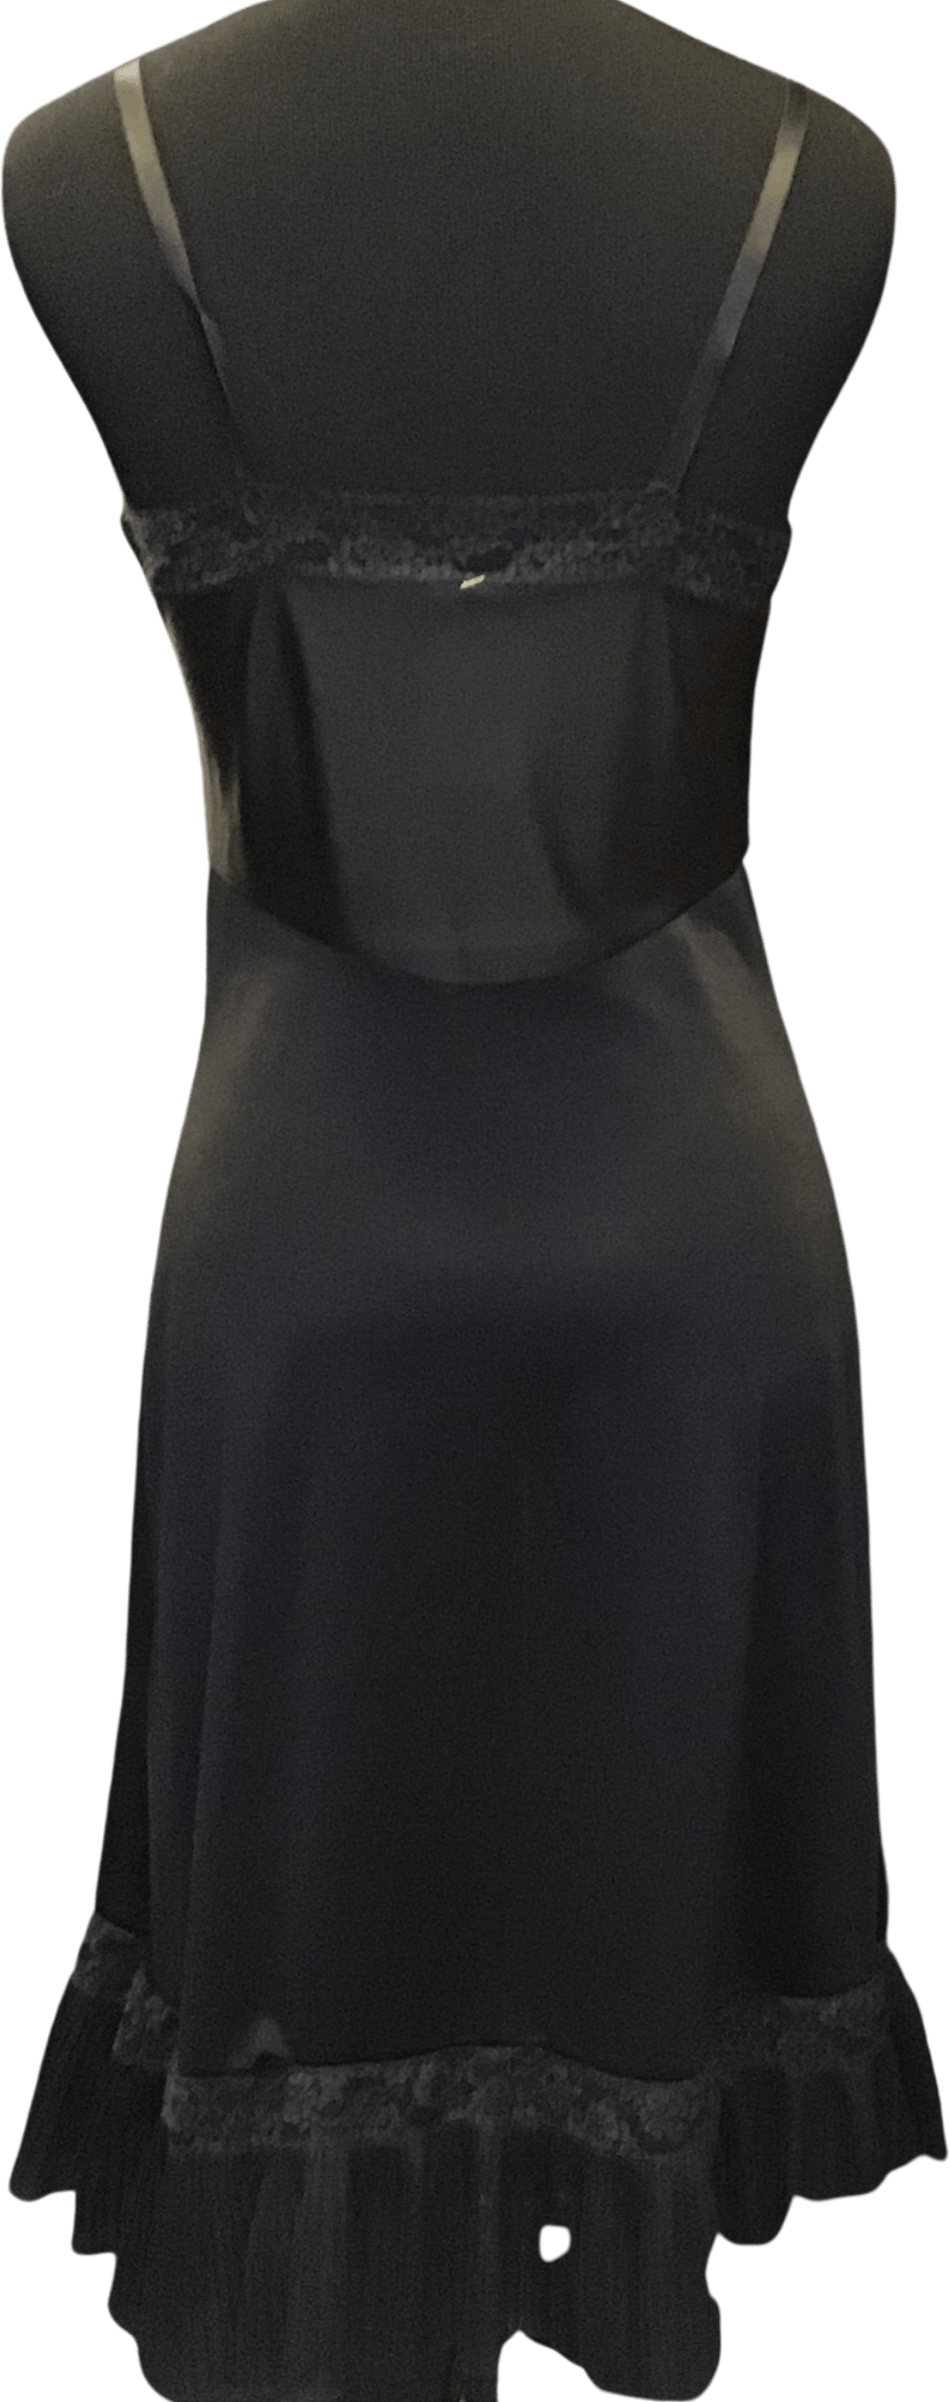 Vintage 60s Silky Black Slip Dress By Carters Shop Thrilling